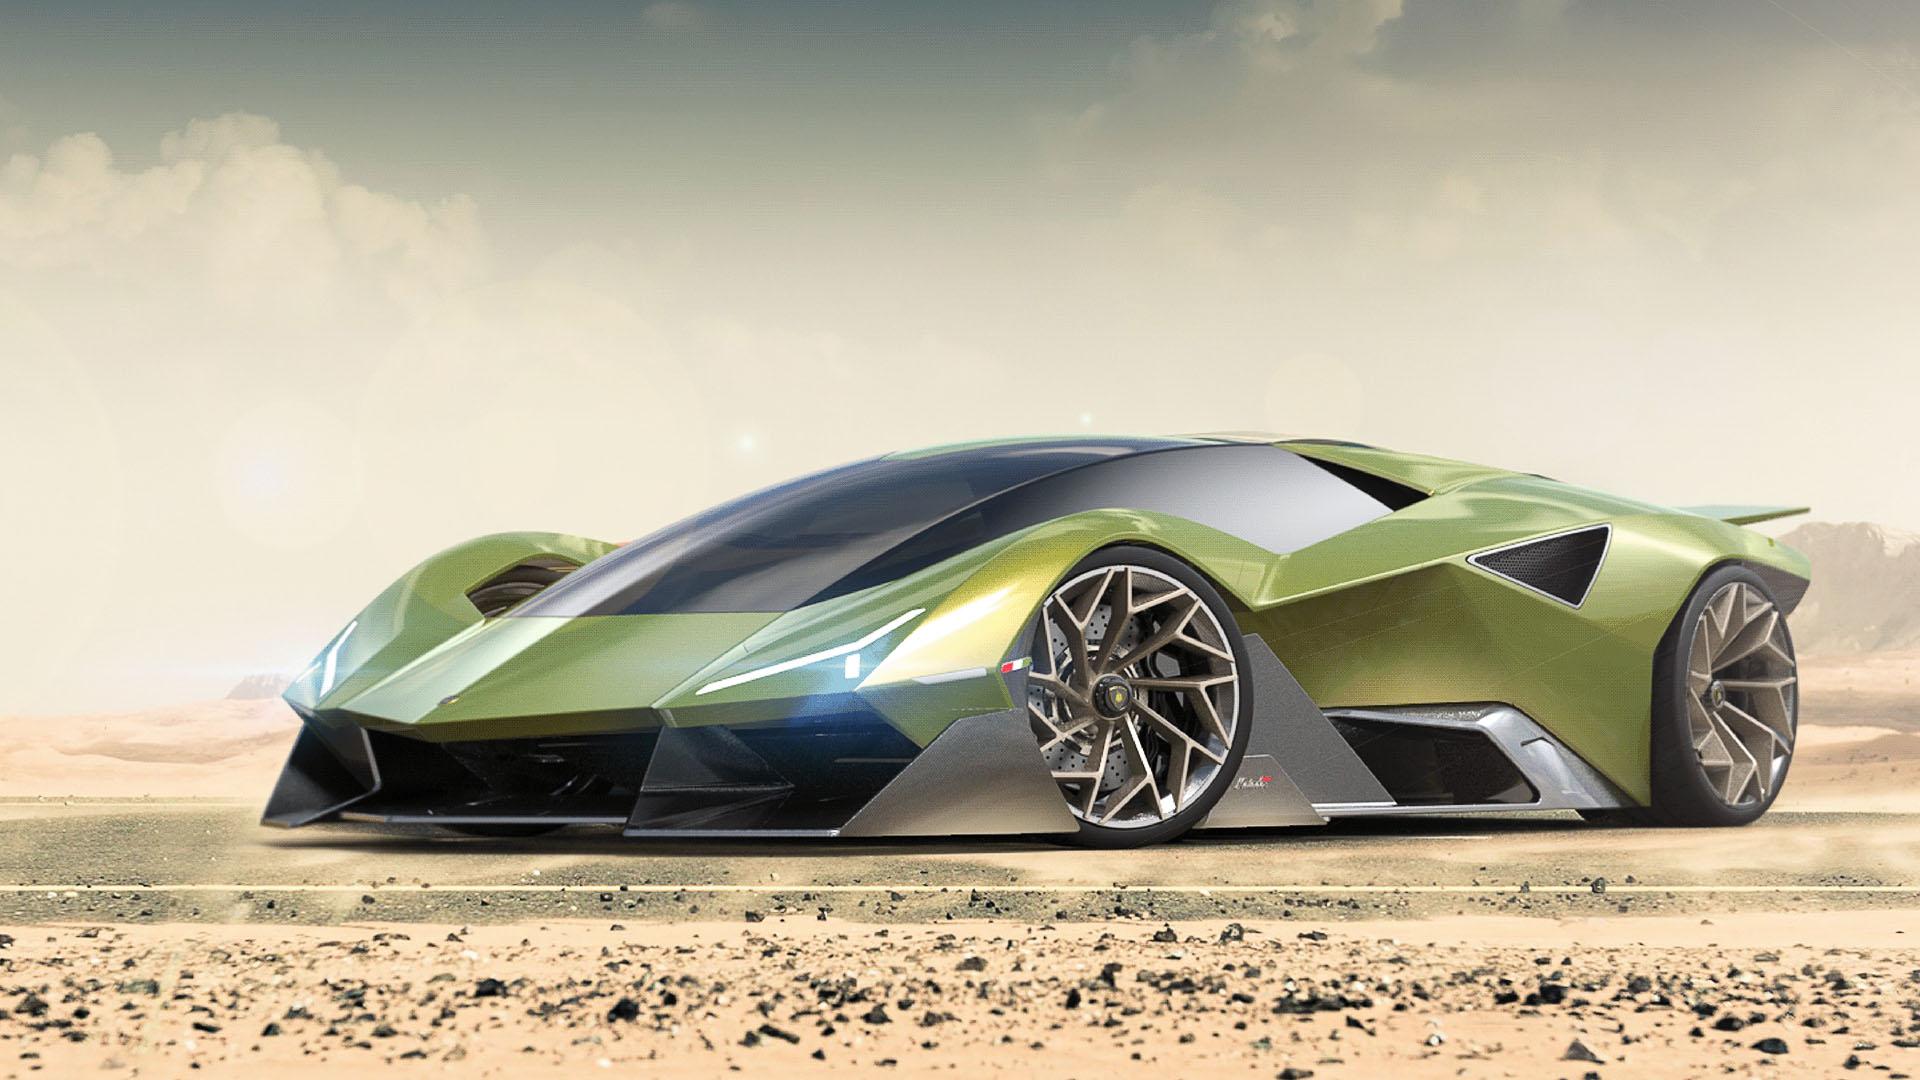 Future Lamborghini concepts - LamboCARS